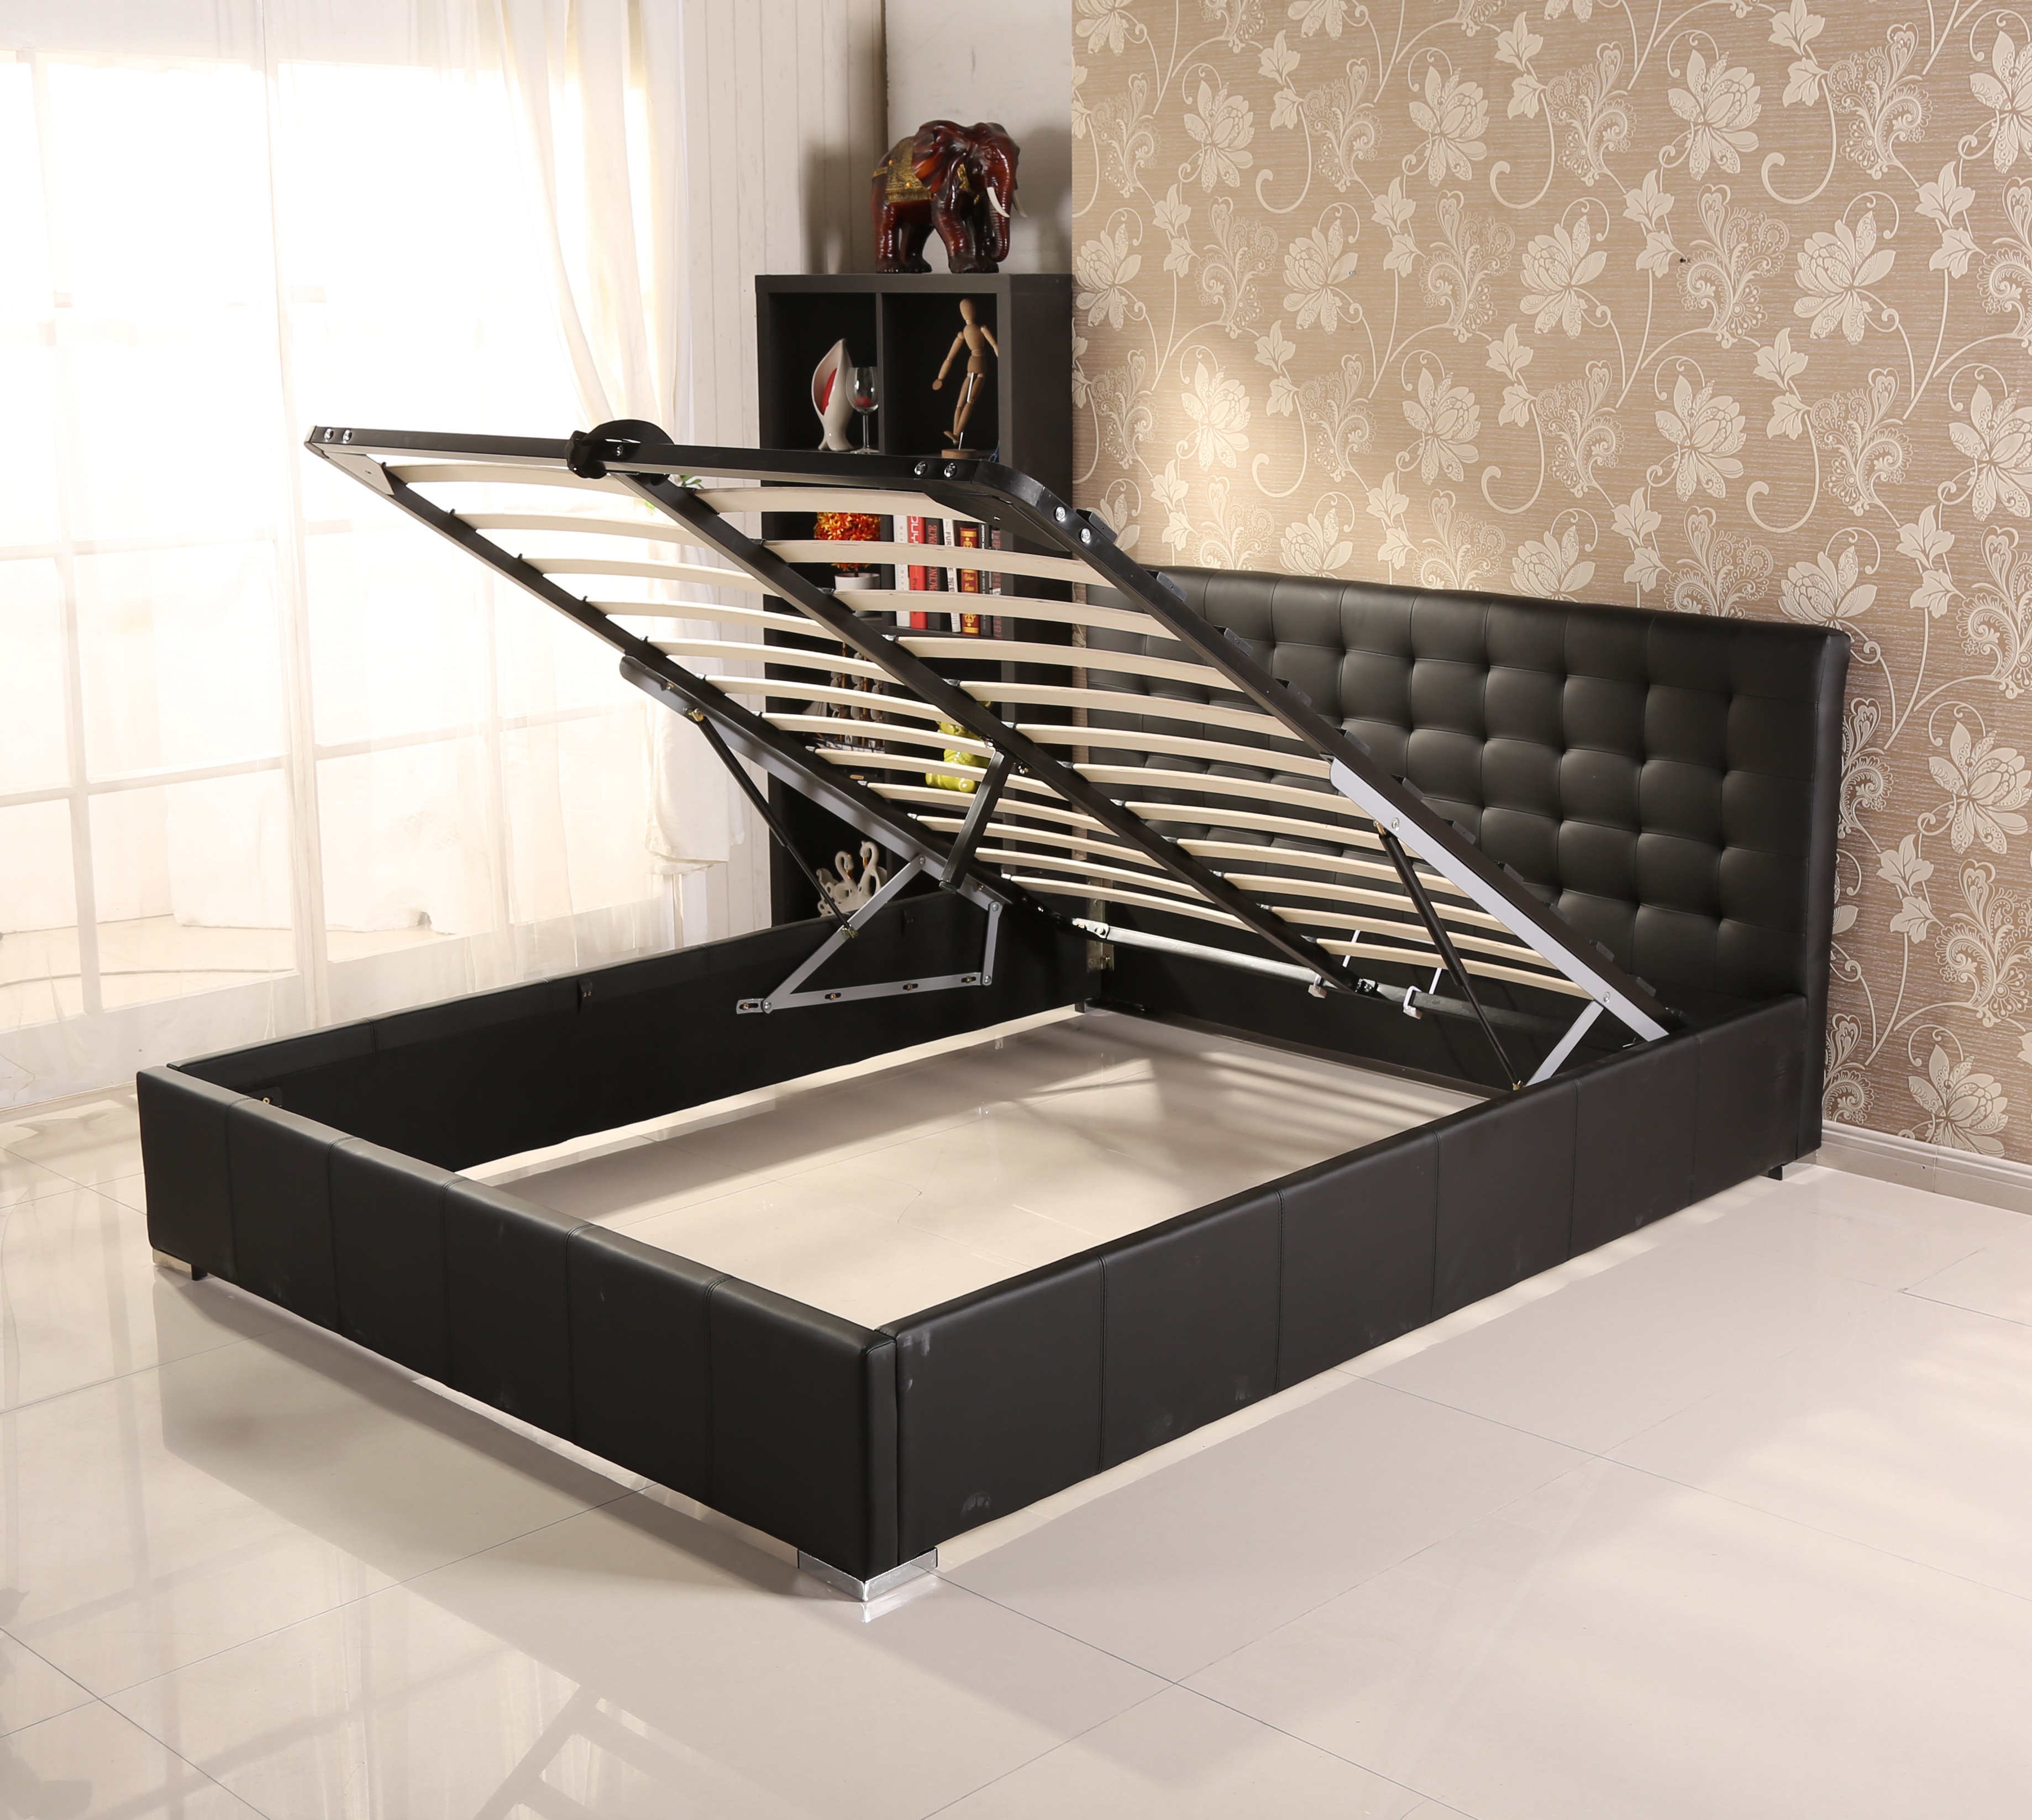 Black PU bed with storage